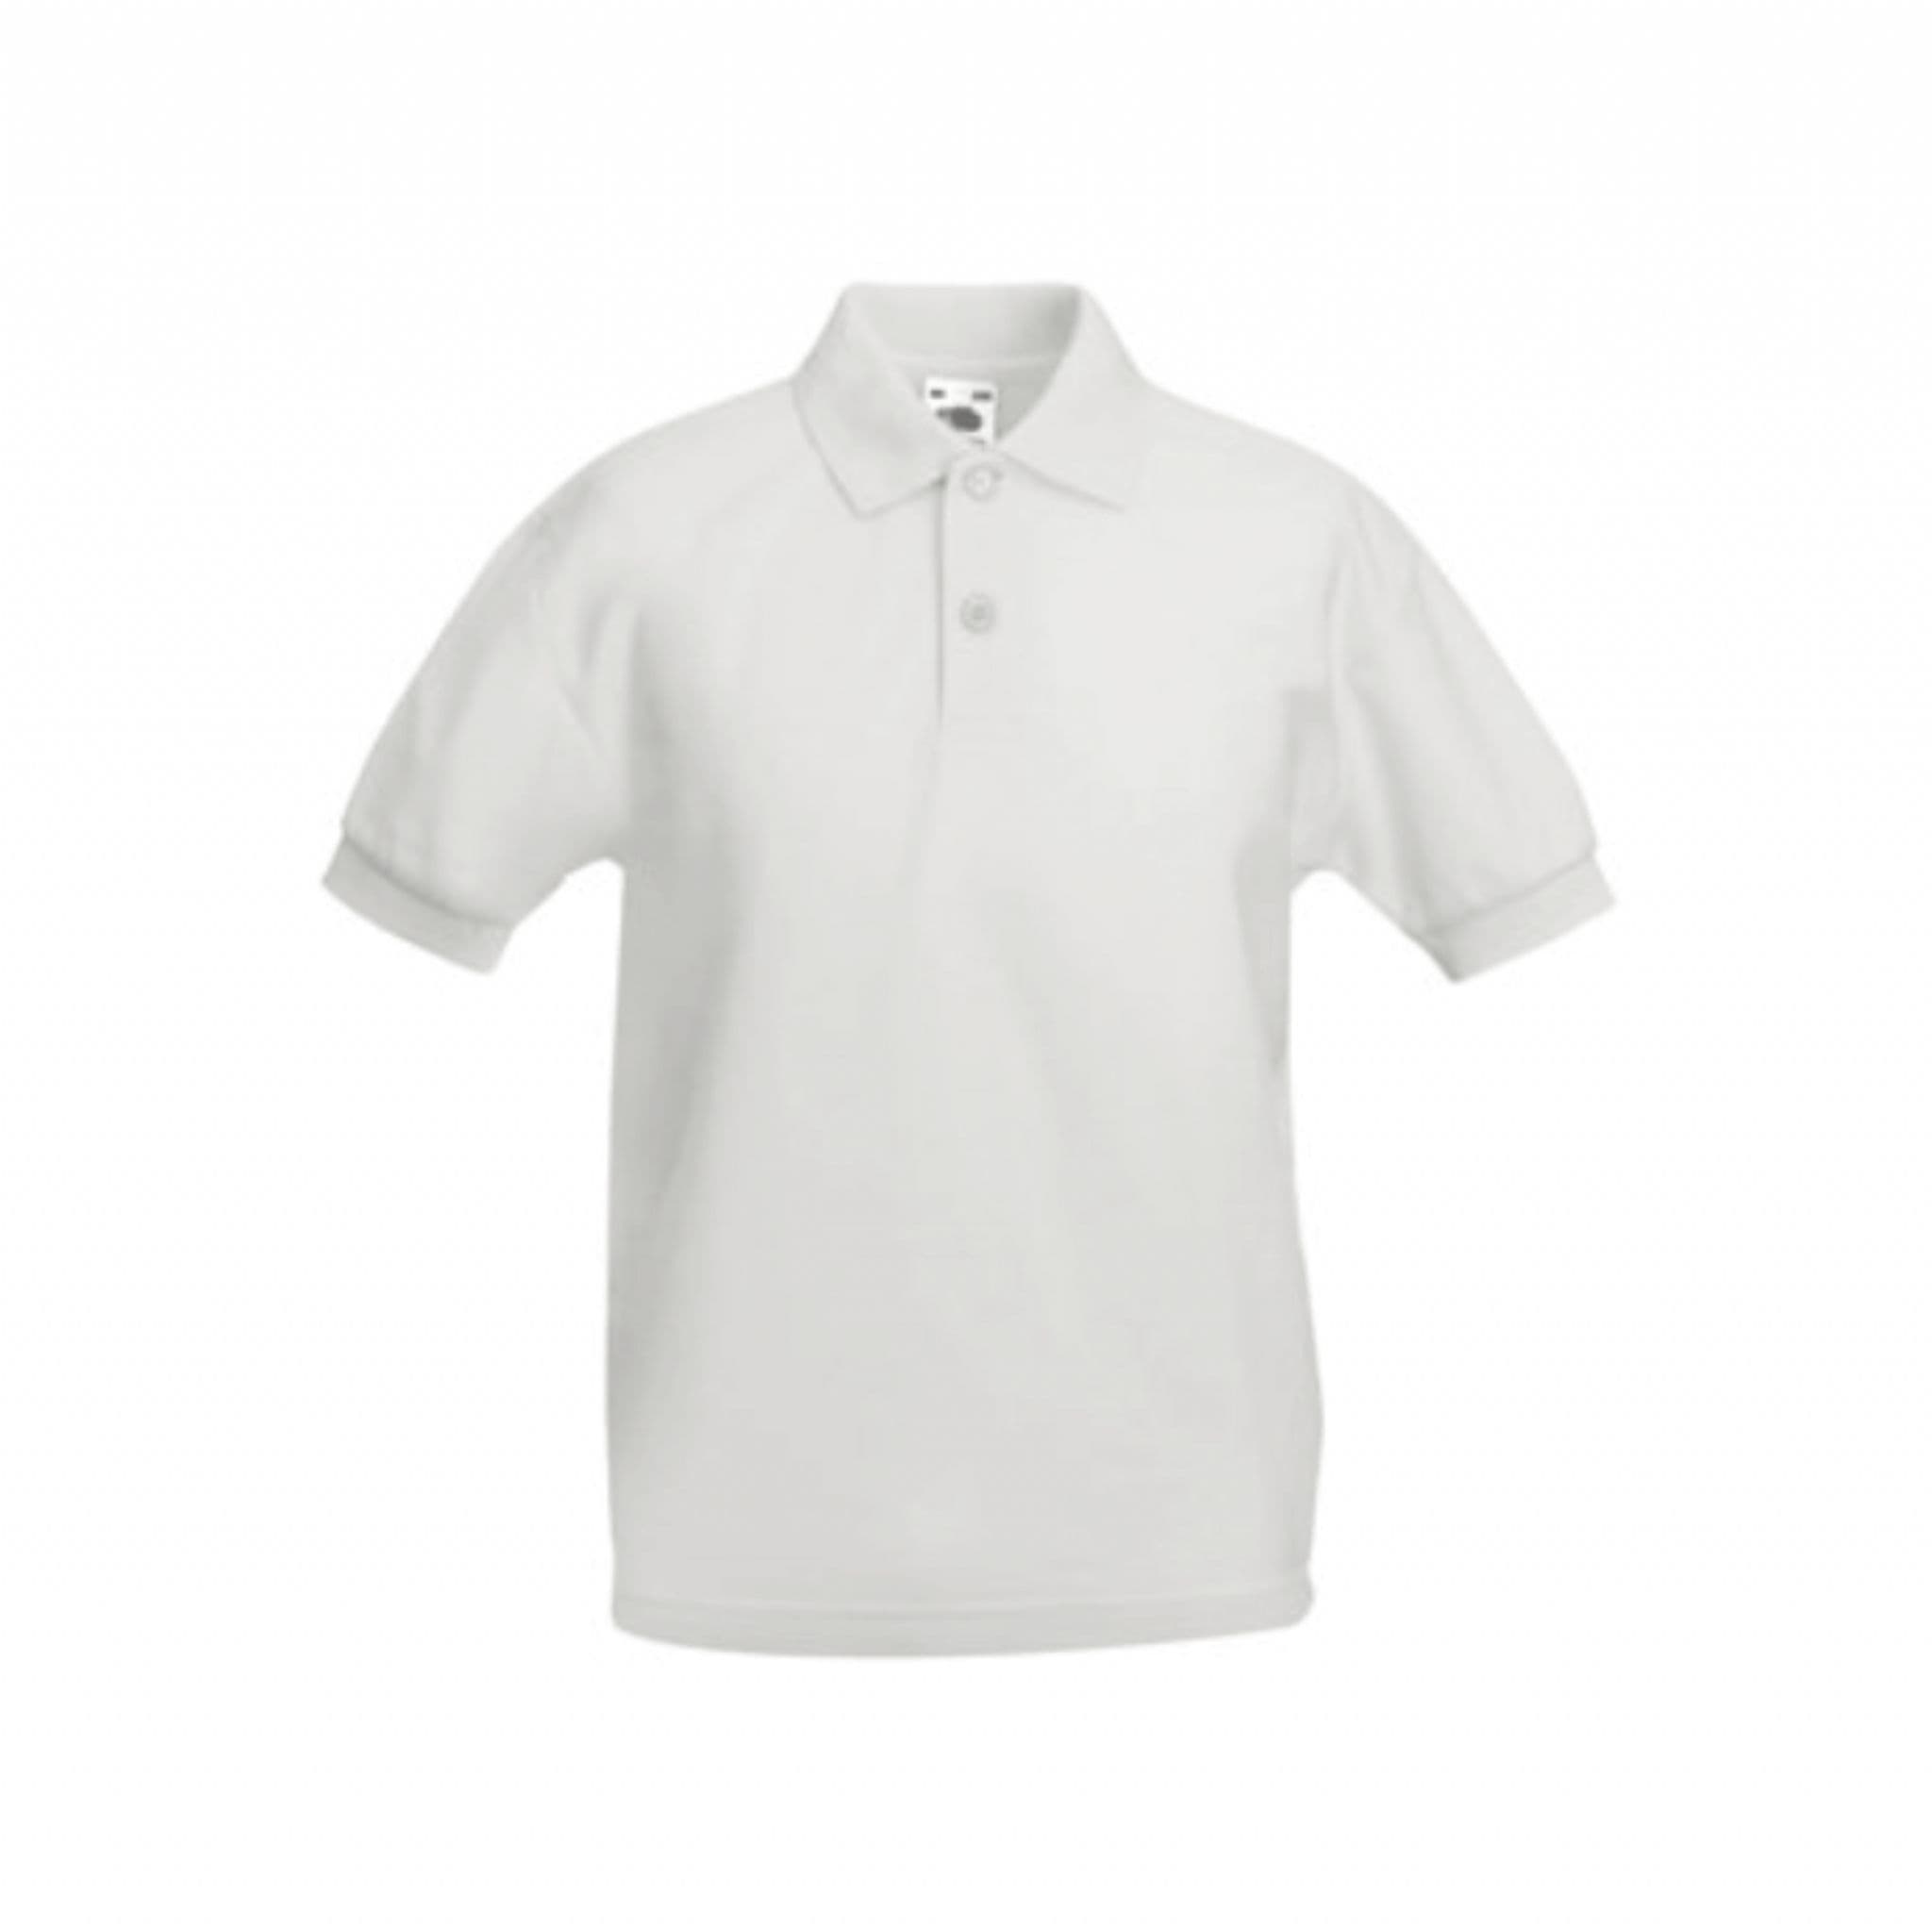 Croft Polo Shirt - unbadged